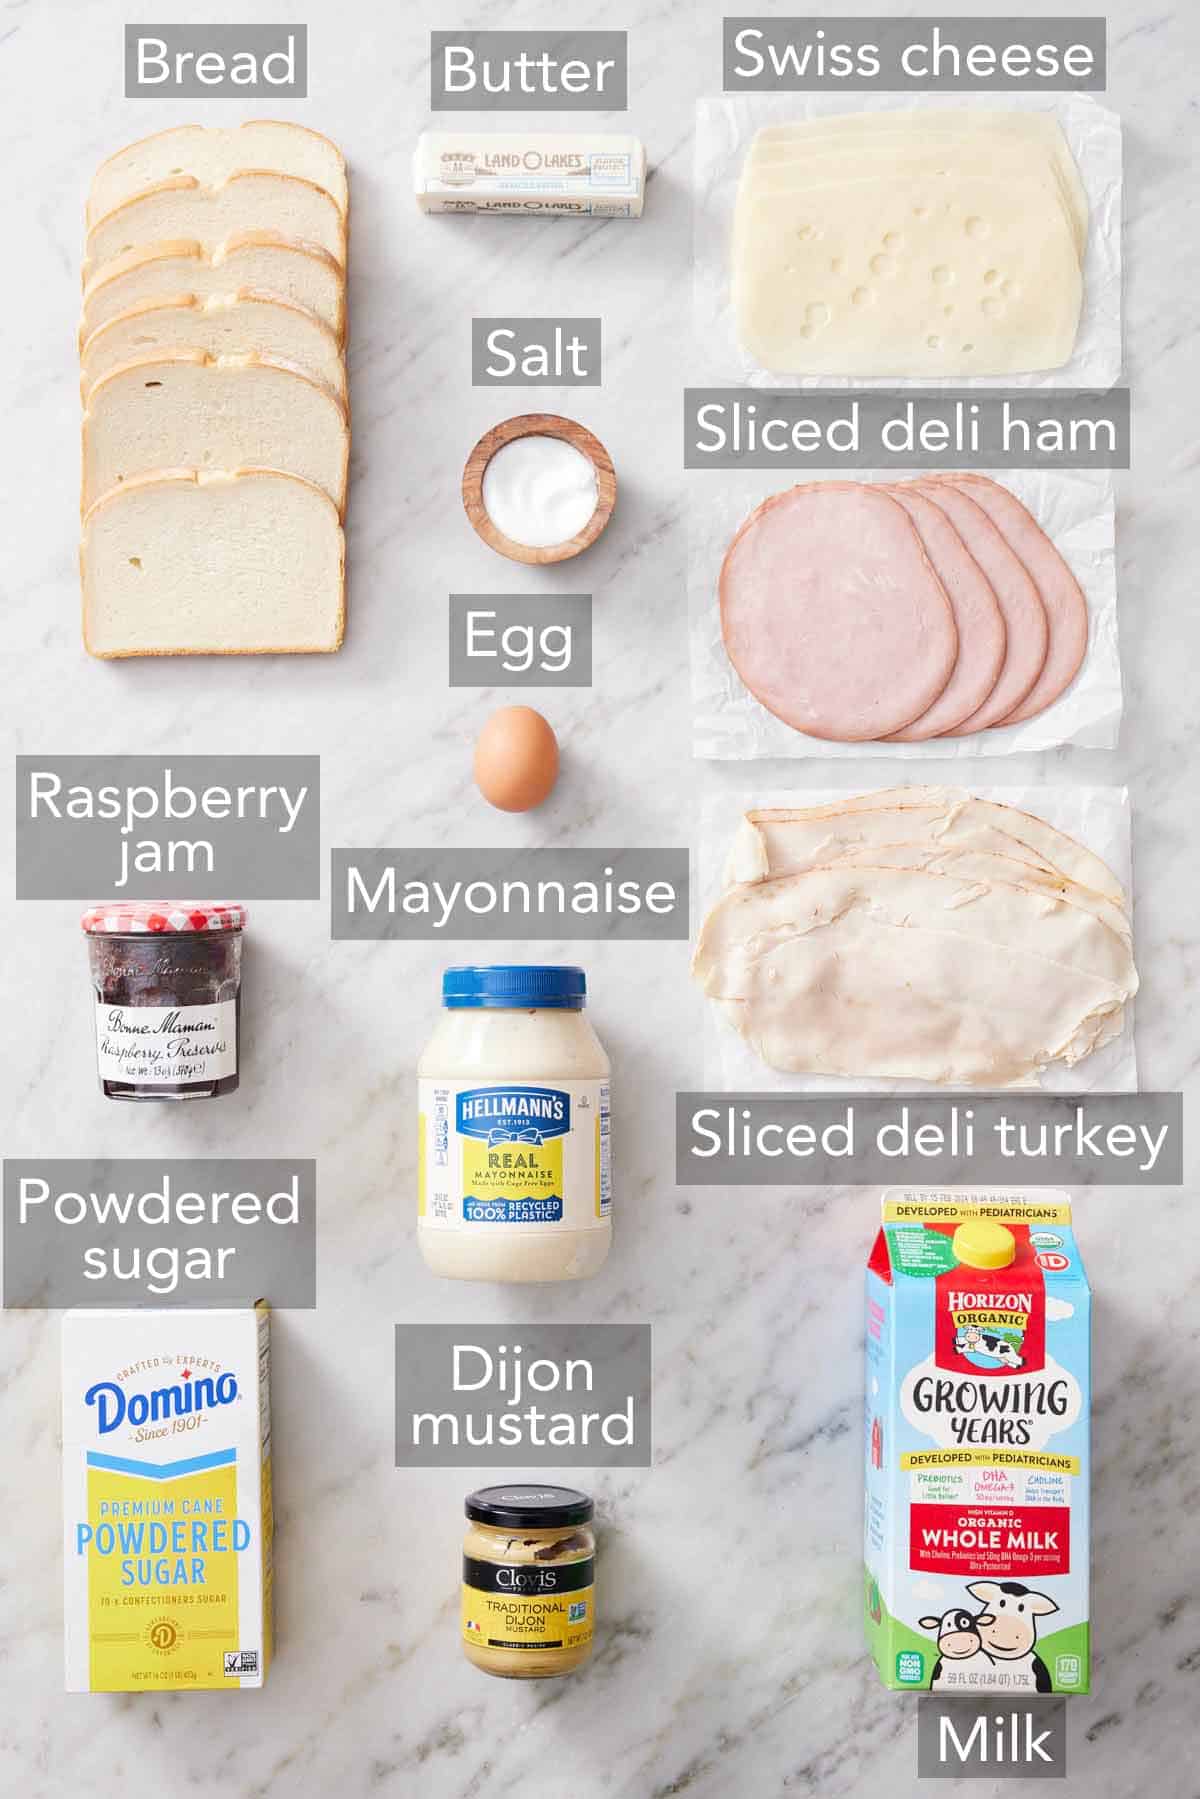 Ingredients needed to make Monte Cristo sandwiches.